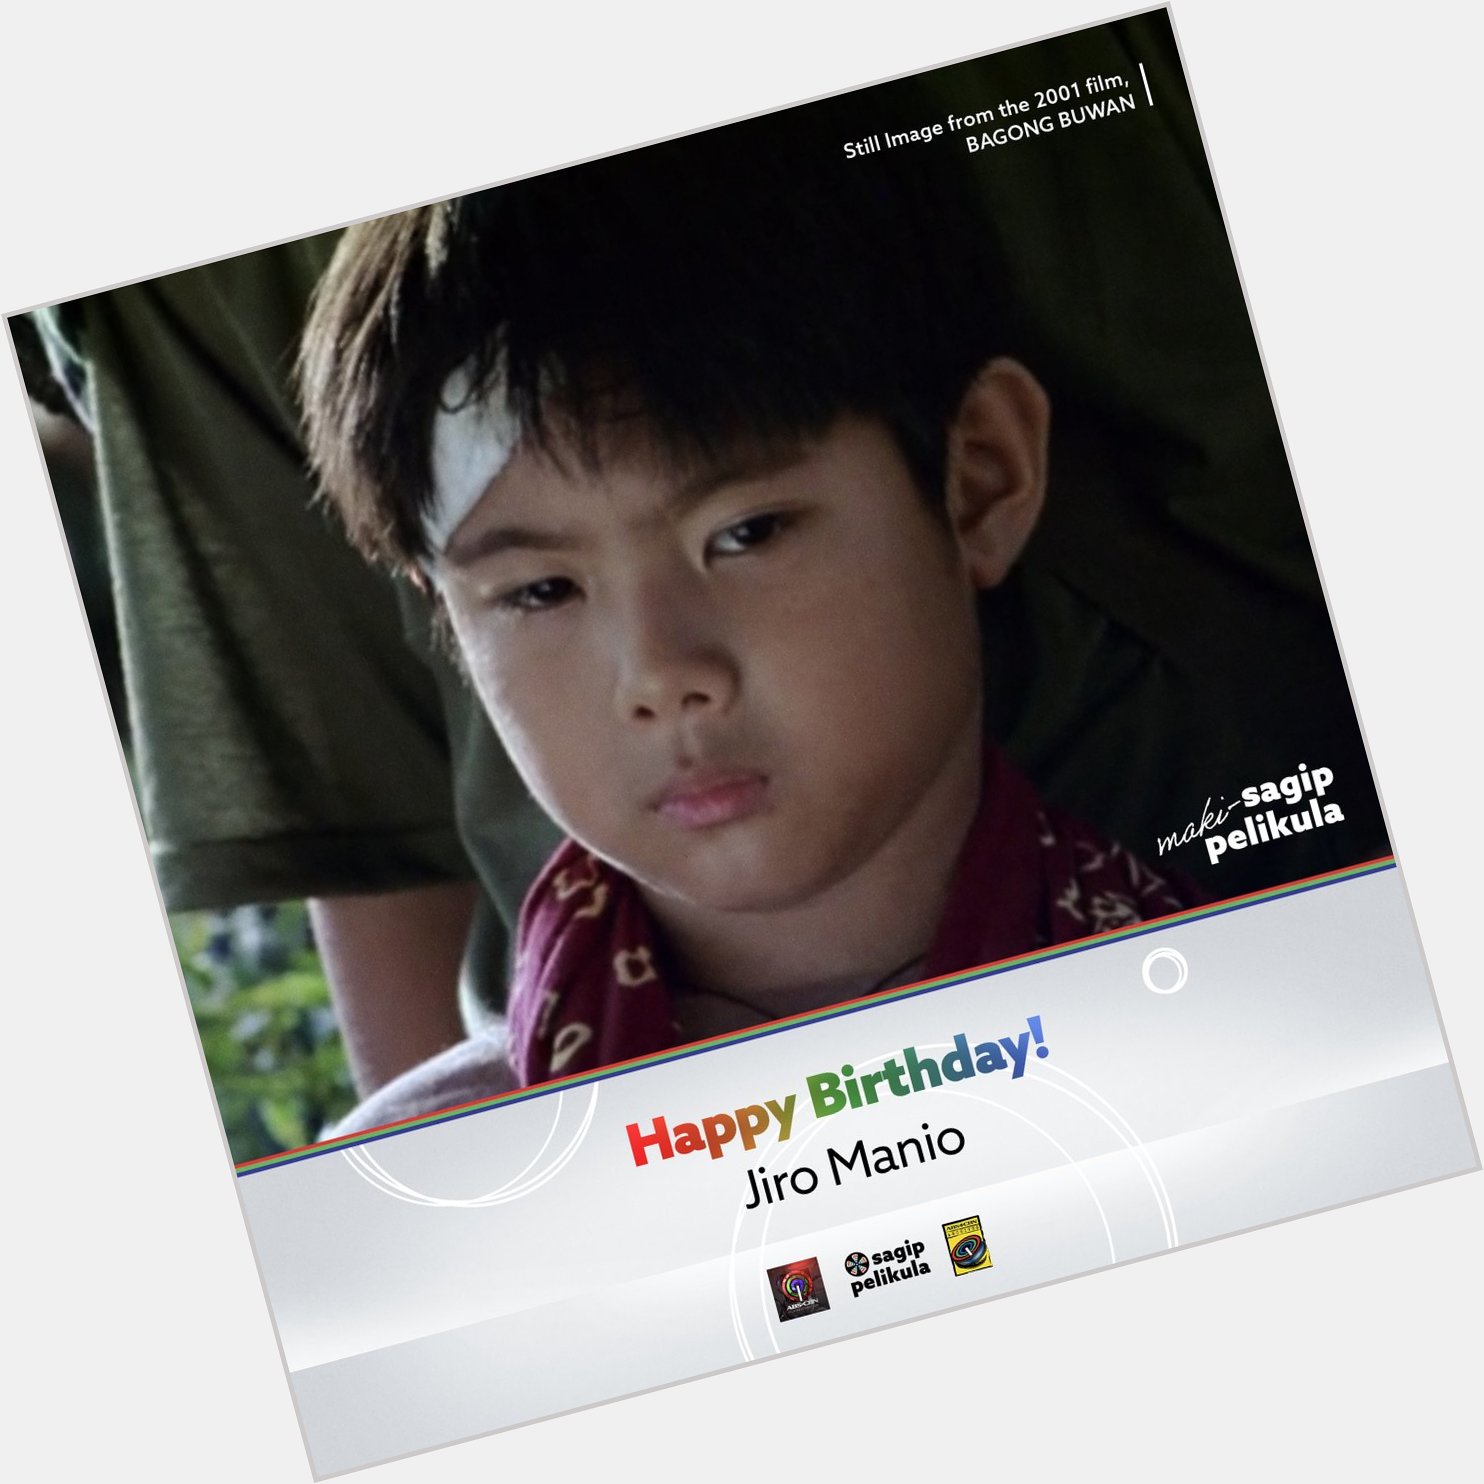 Happy birthday to Jiro Manio!

What\s your favorite film of his?  